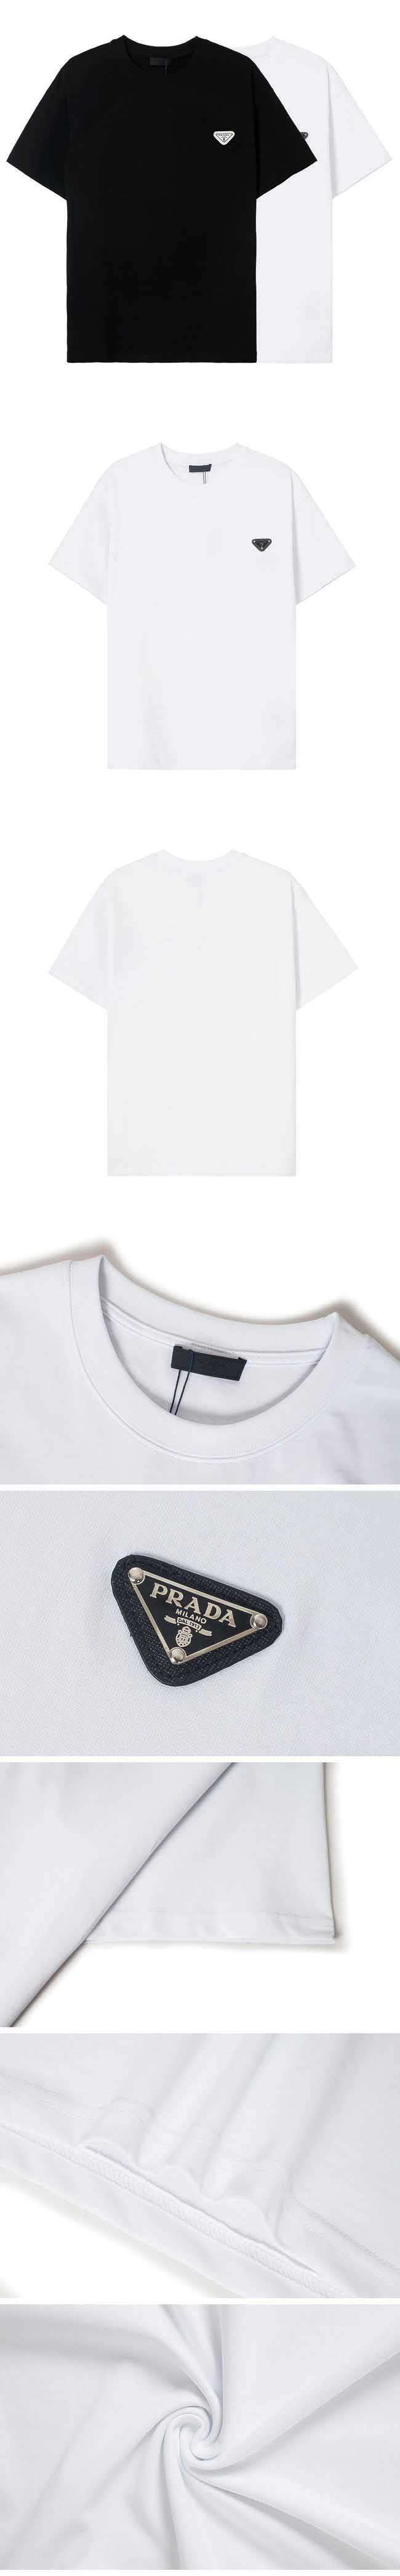 Prada Chest Triangle Logo Tee プラダ チェスト トライアングル ロゴ Tシャツ